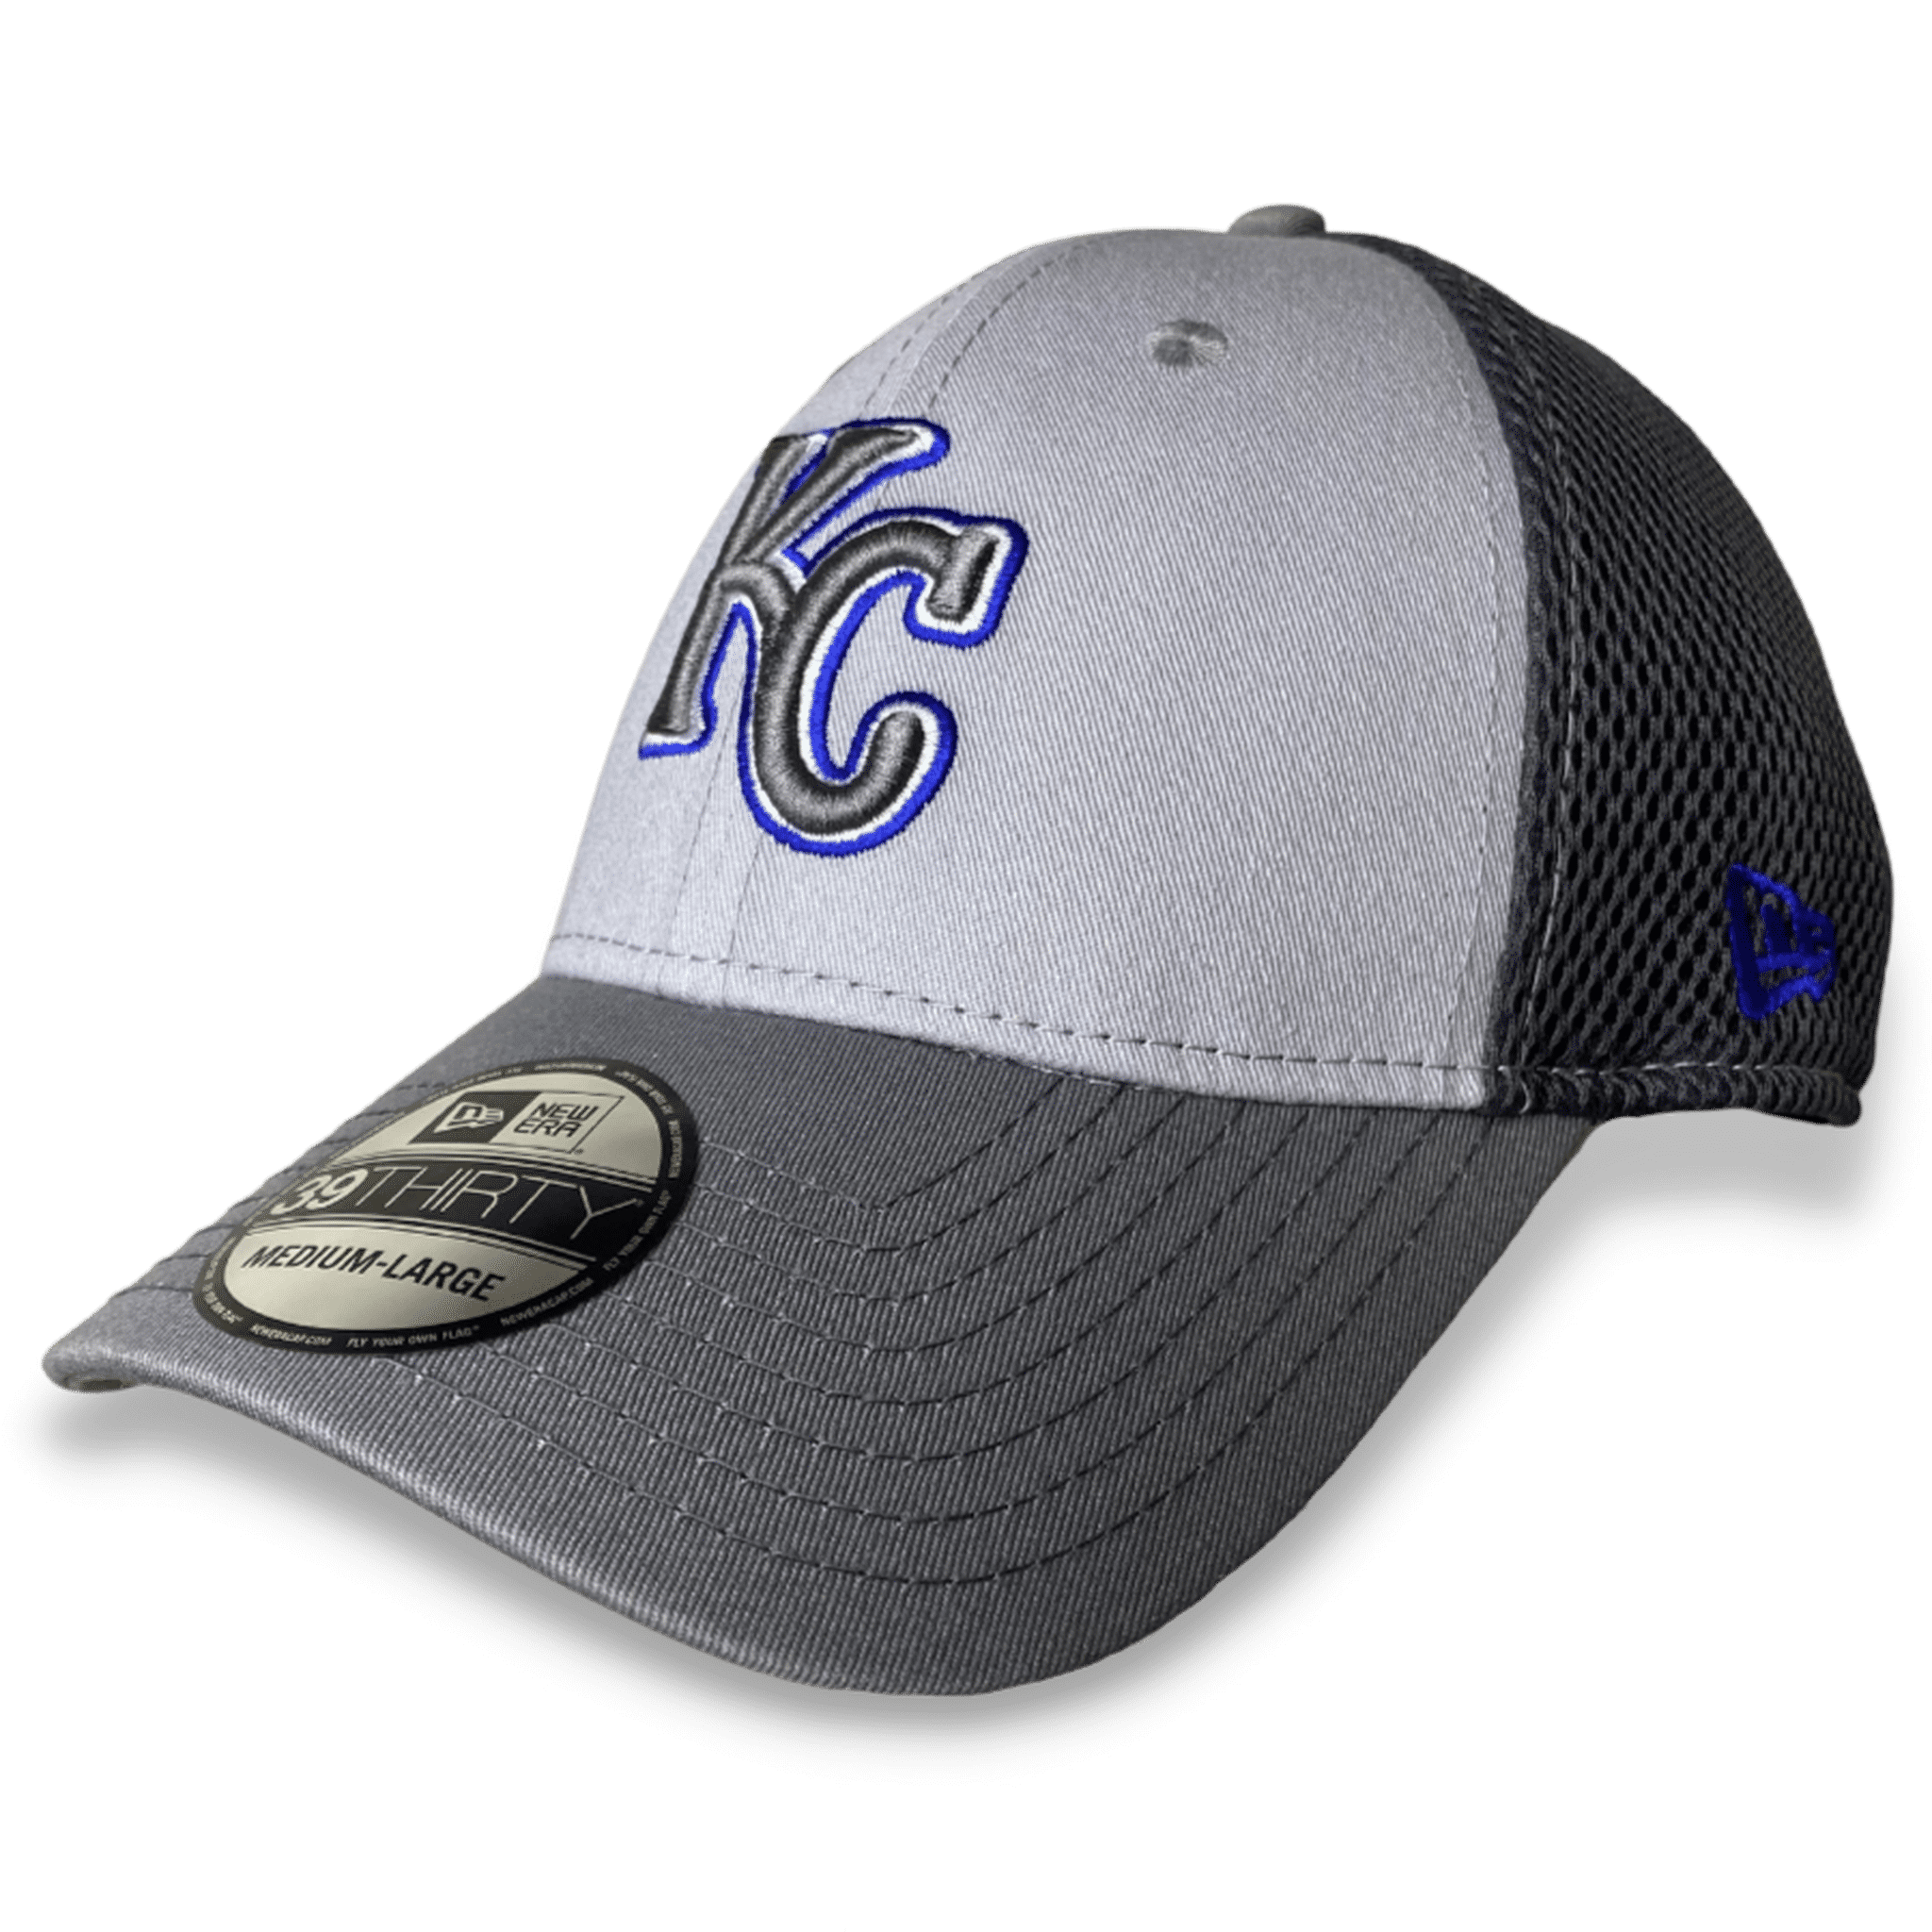 New Era Kansas City Royals MLB Neo 39THIRTY Stretch Fit Cap